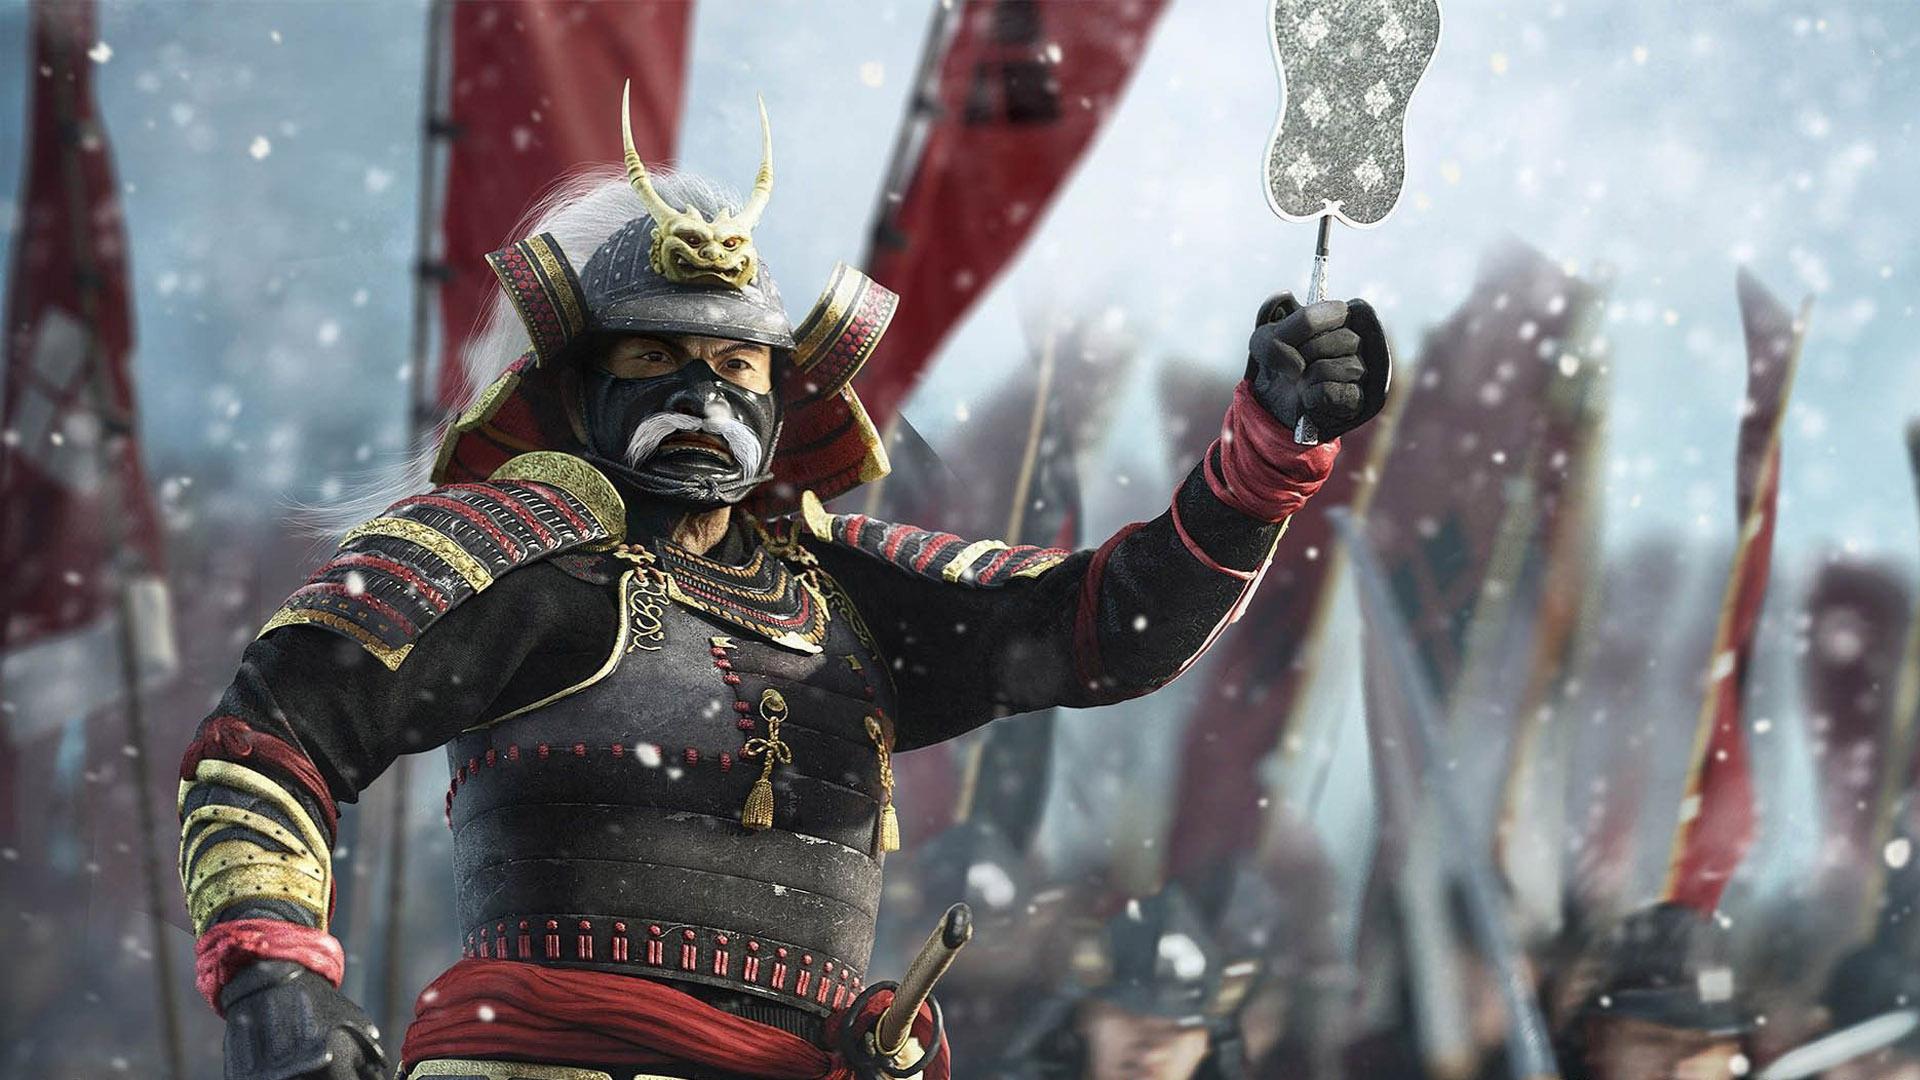 Download 1920x1080 HD Wallpaper total war shogun 2 warlord